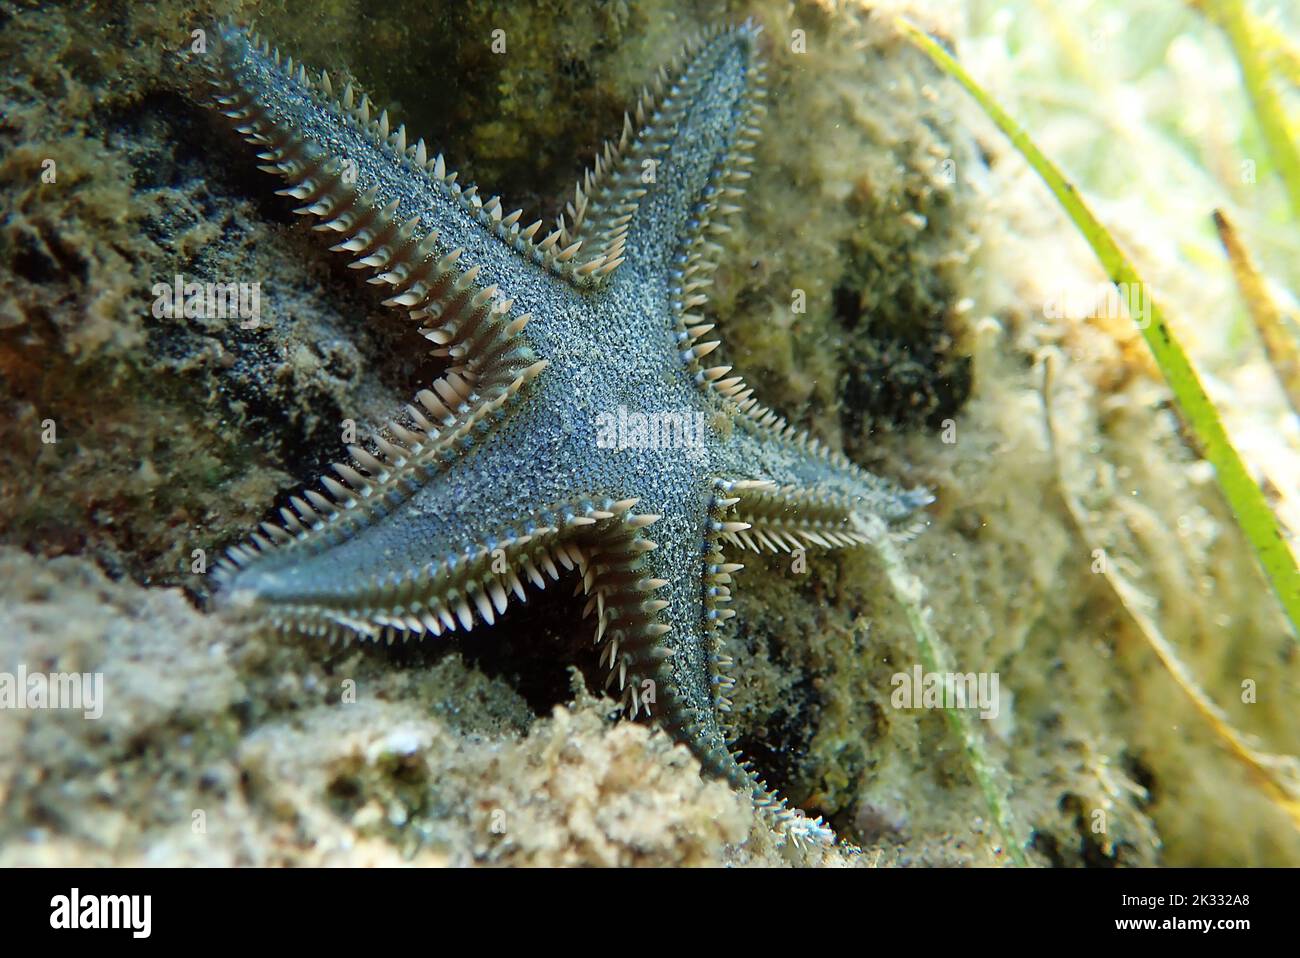 Underwater image of Mediterranean sand sea-star Stock Photo